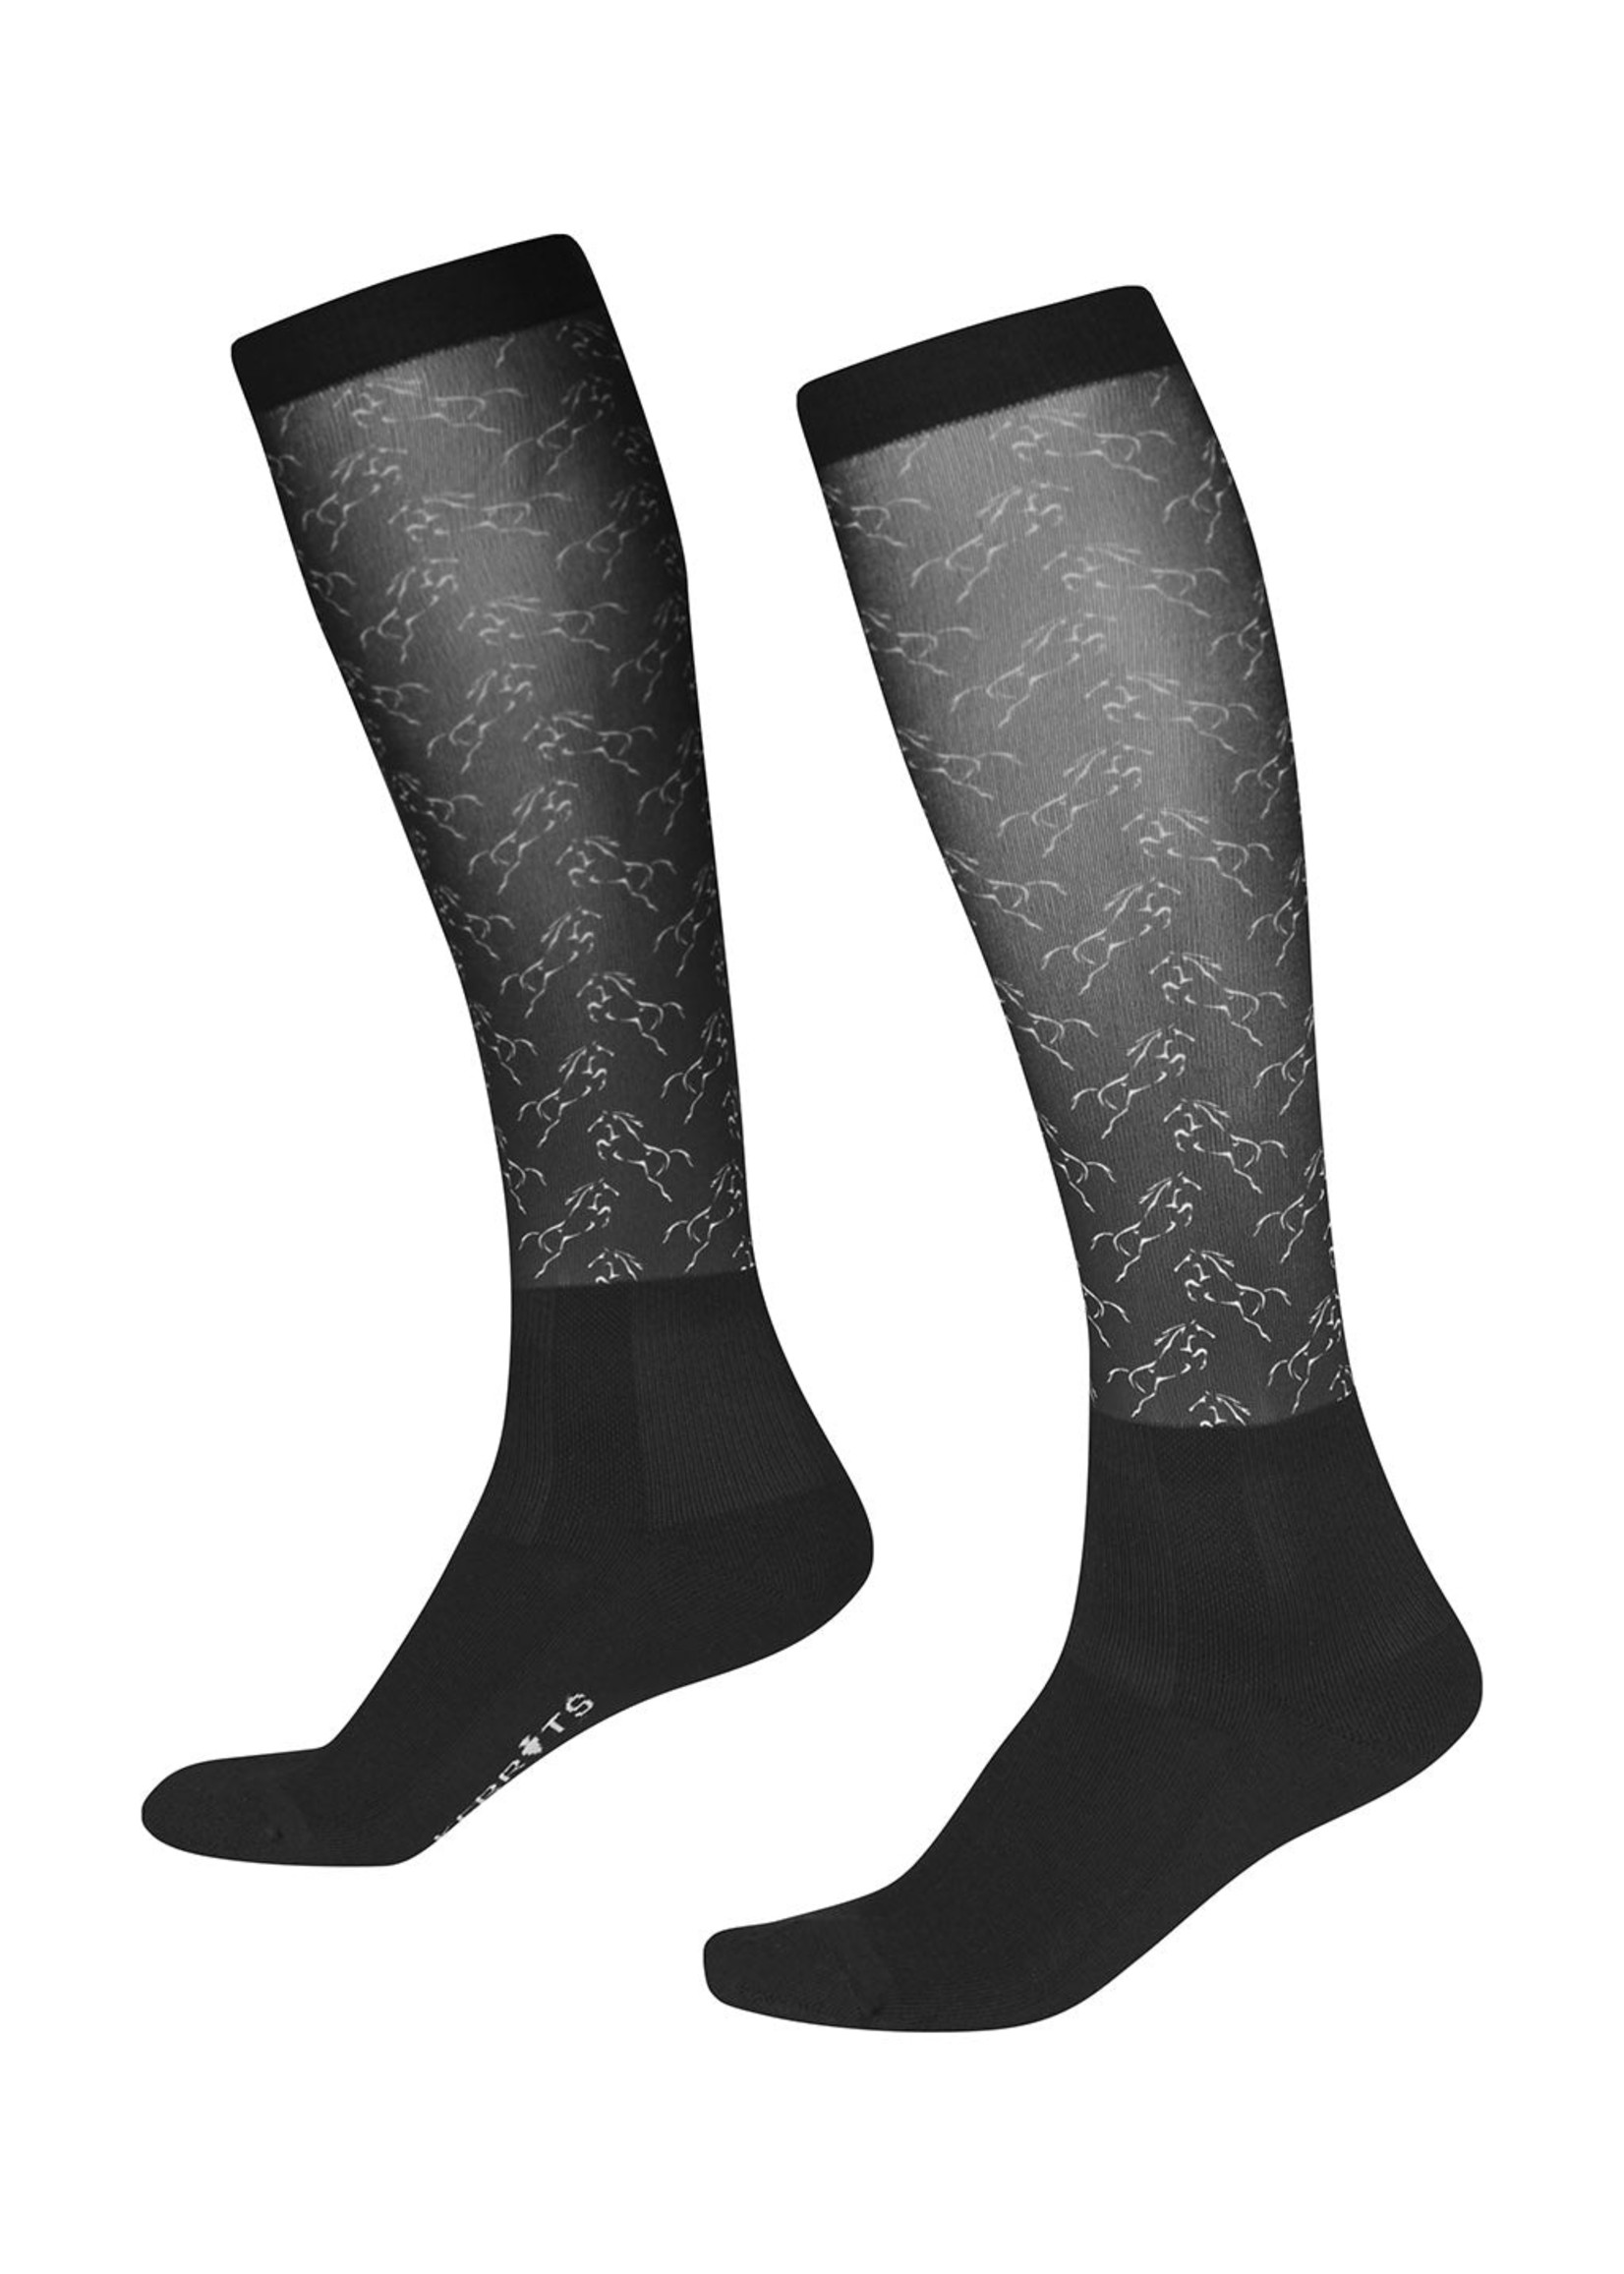 Kerrits Dual Zone Boot Socks